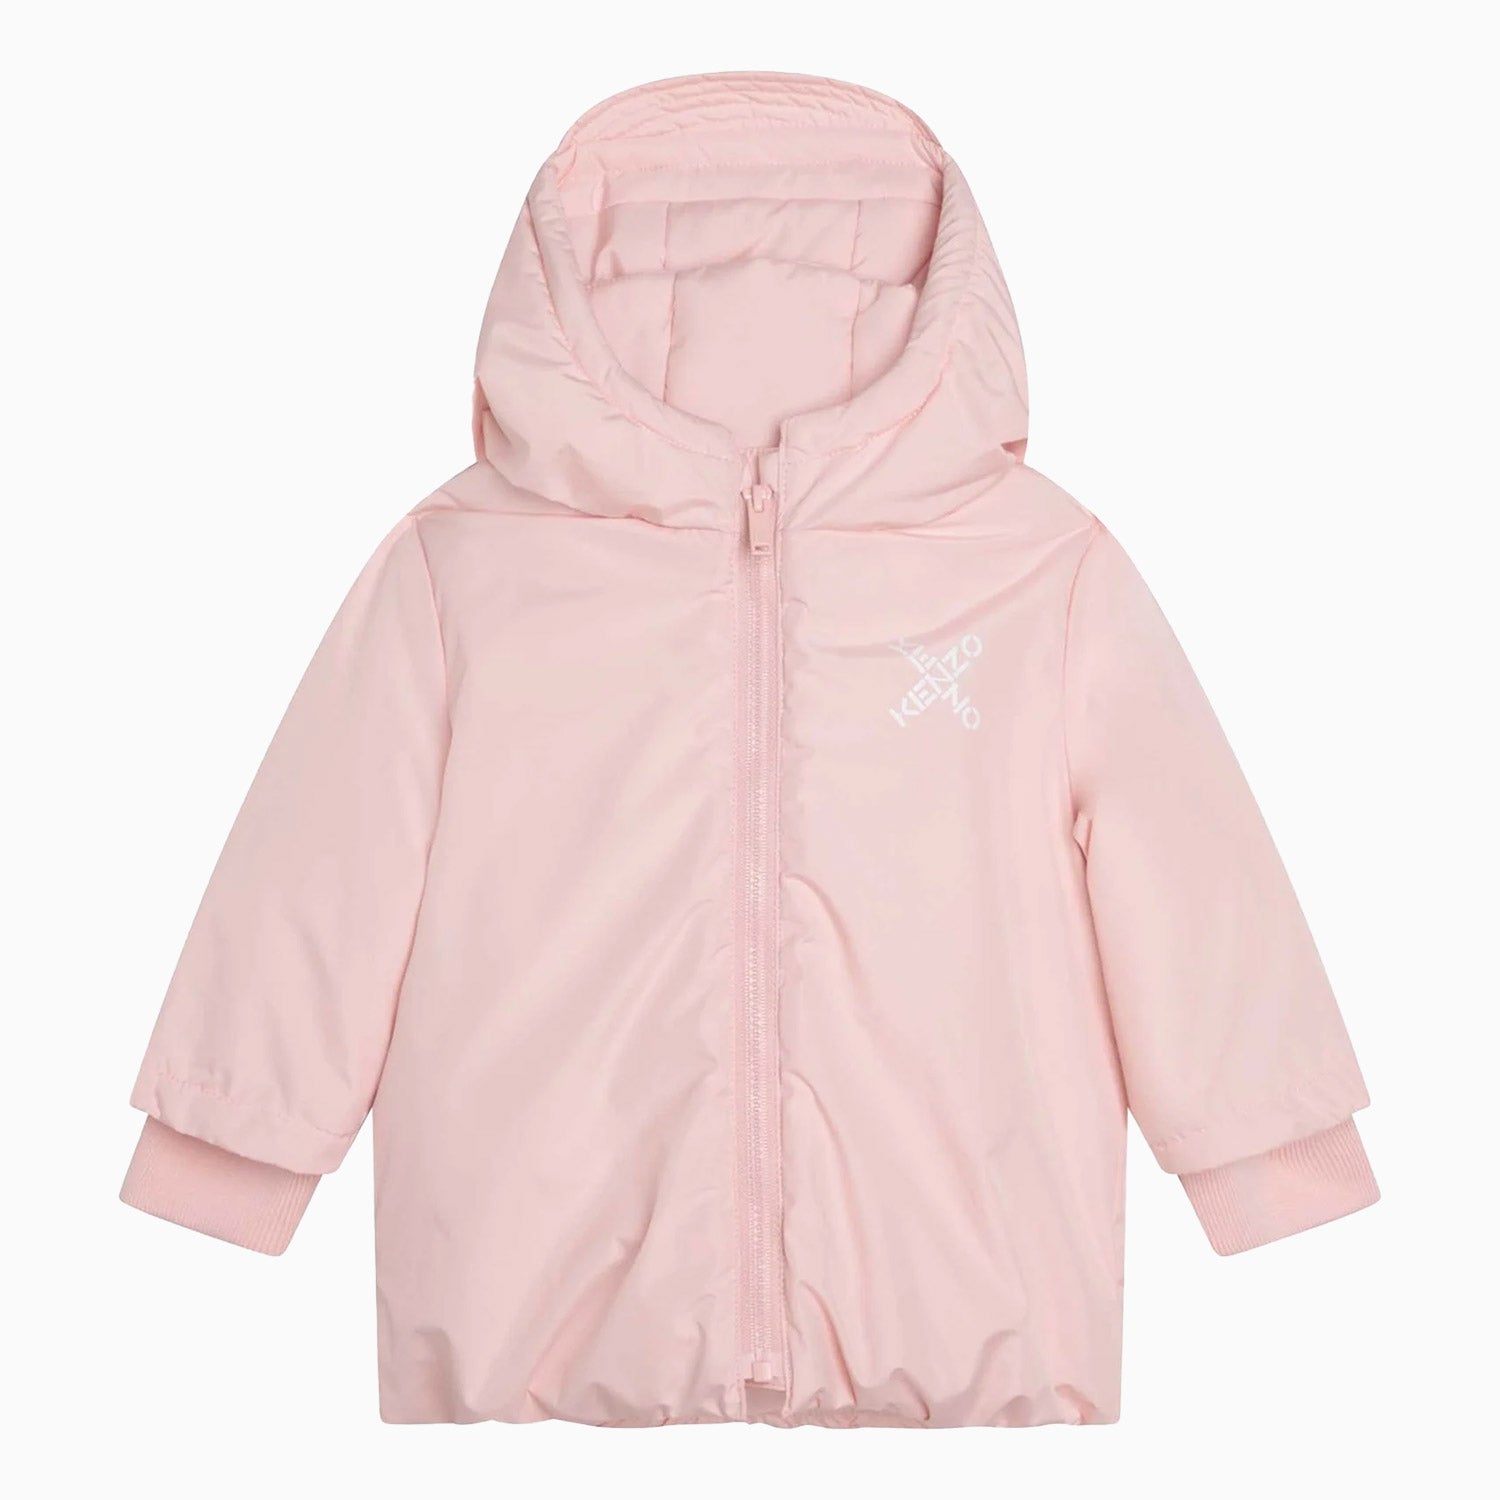 Kenzo Kid's Puffer Jacket - Color: Pink - Kids Premium Clothing -